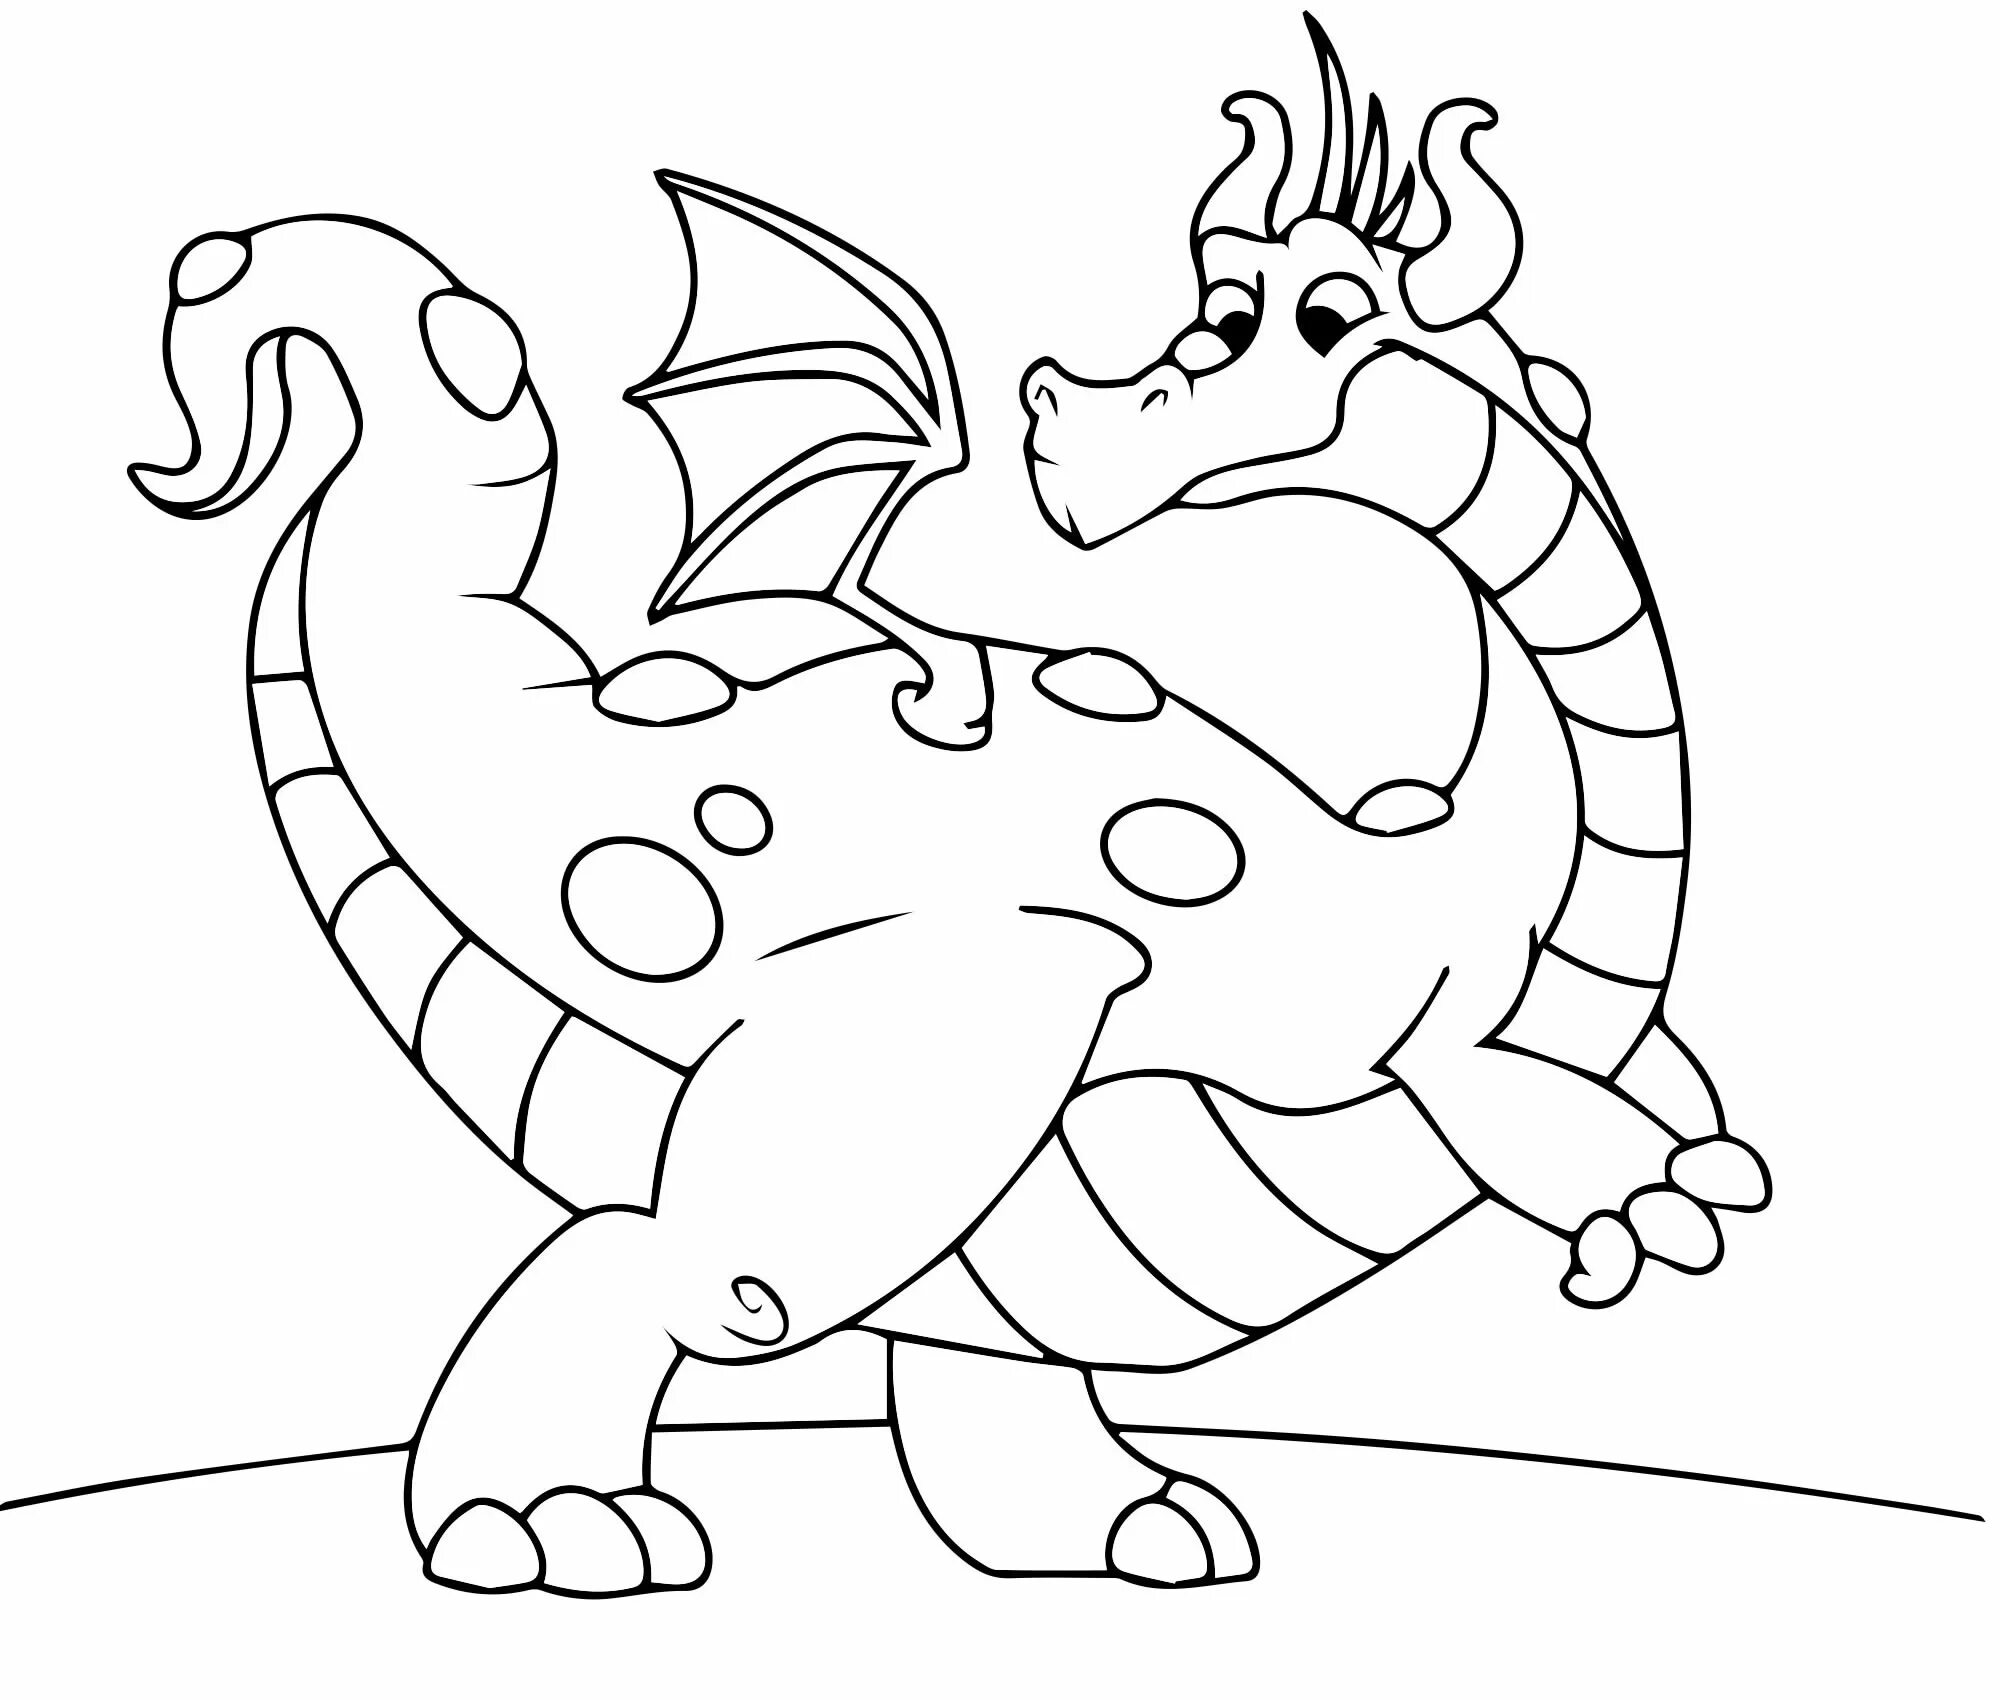 Royal dragon coloring book for kids